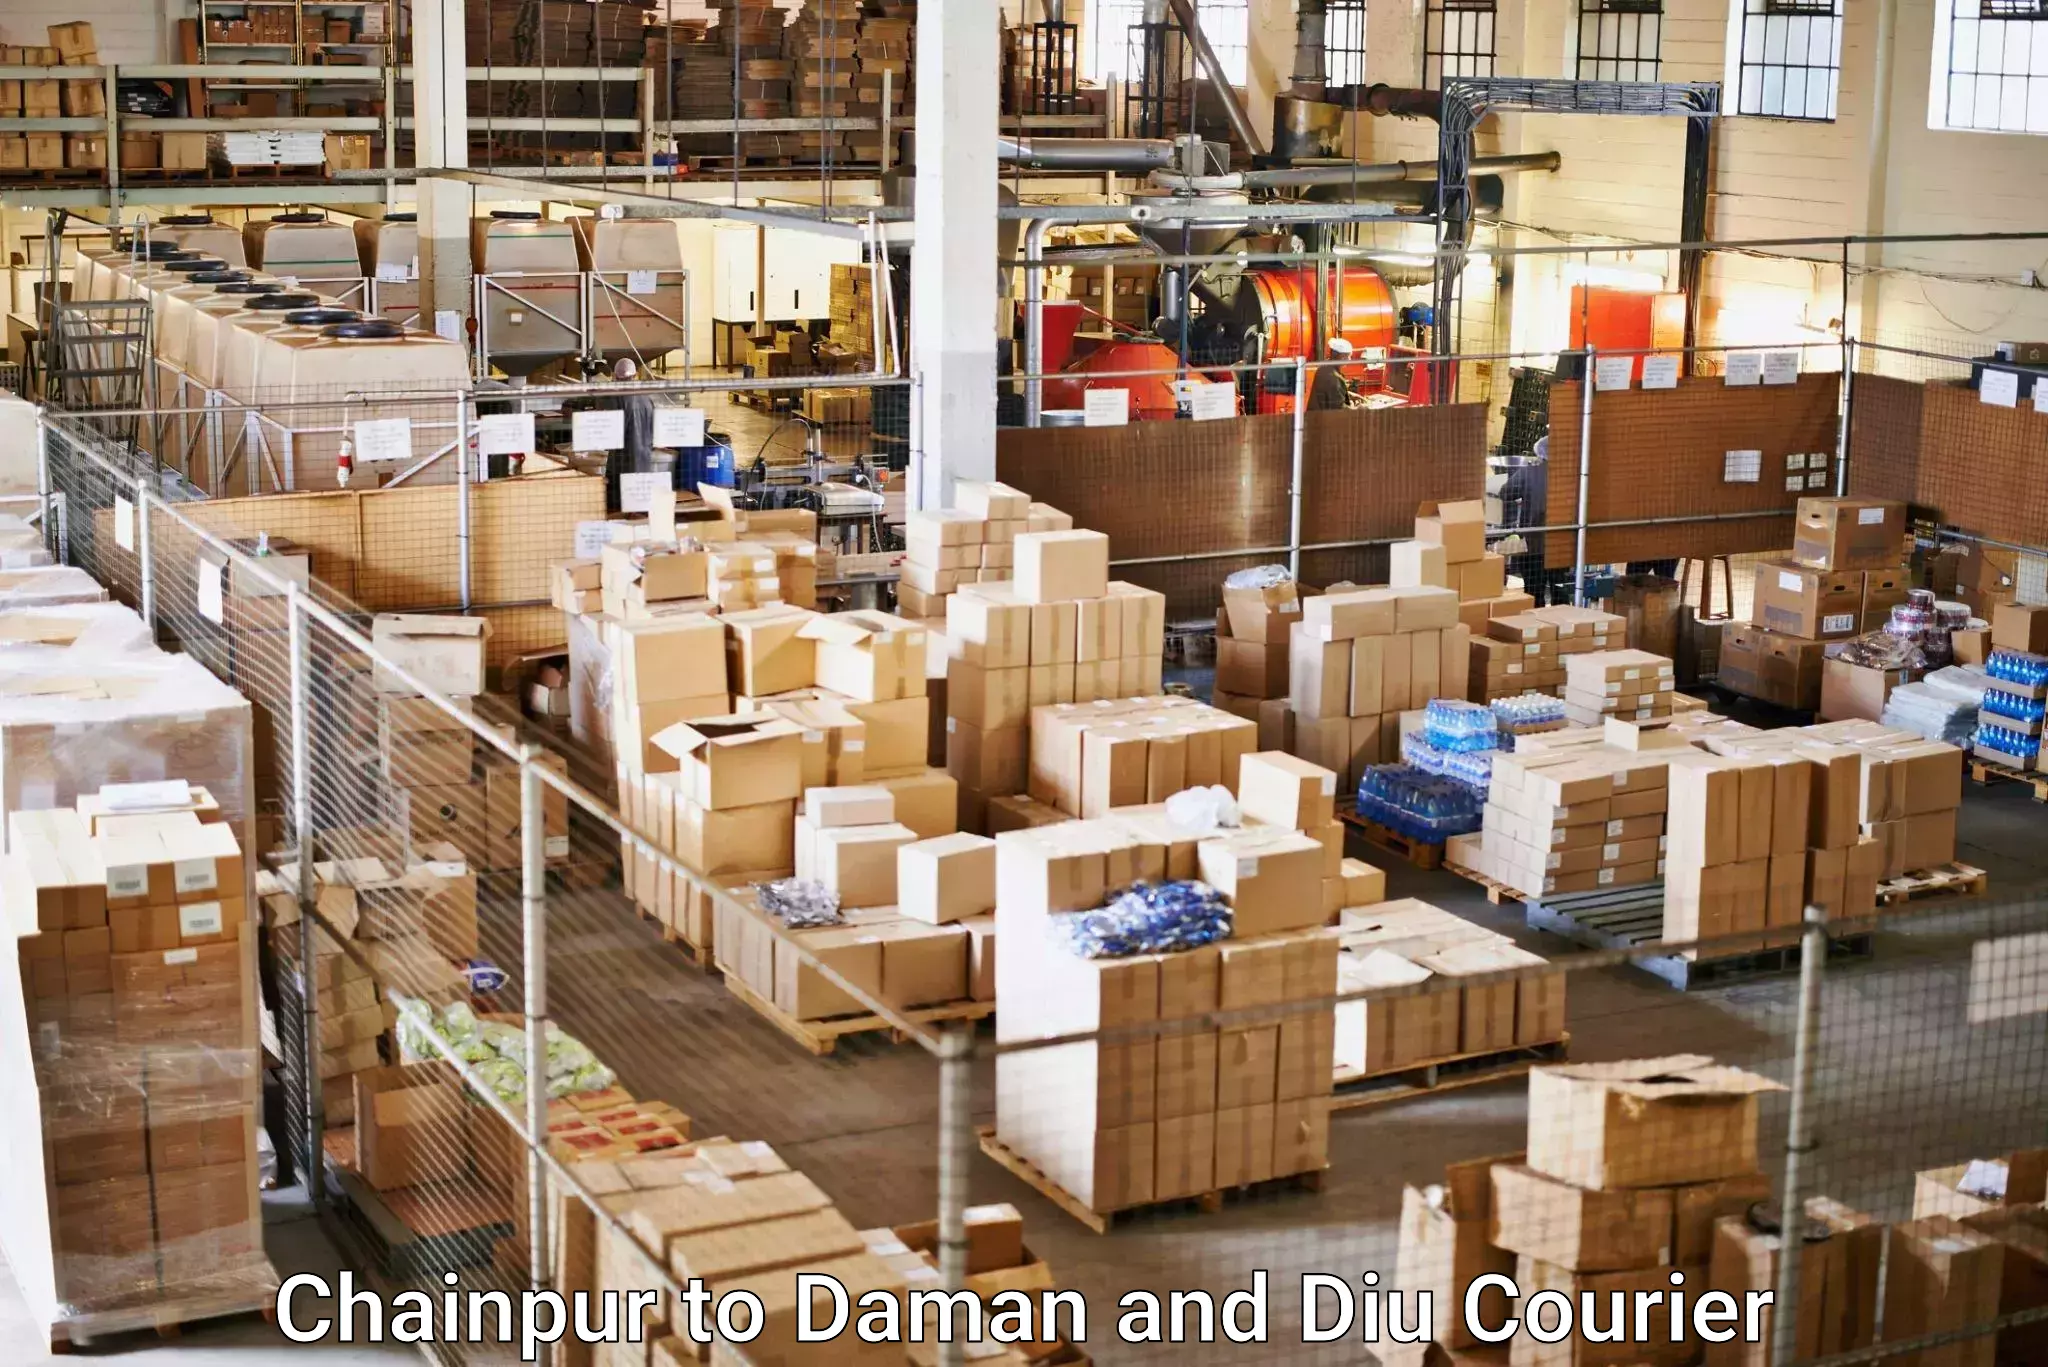 Courier service comparison Chainpur to Diu